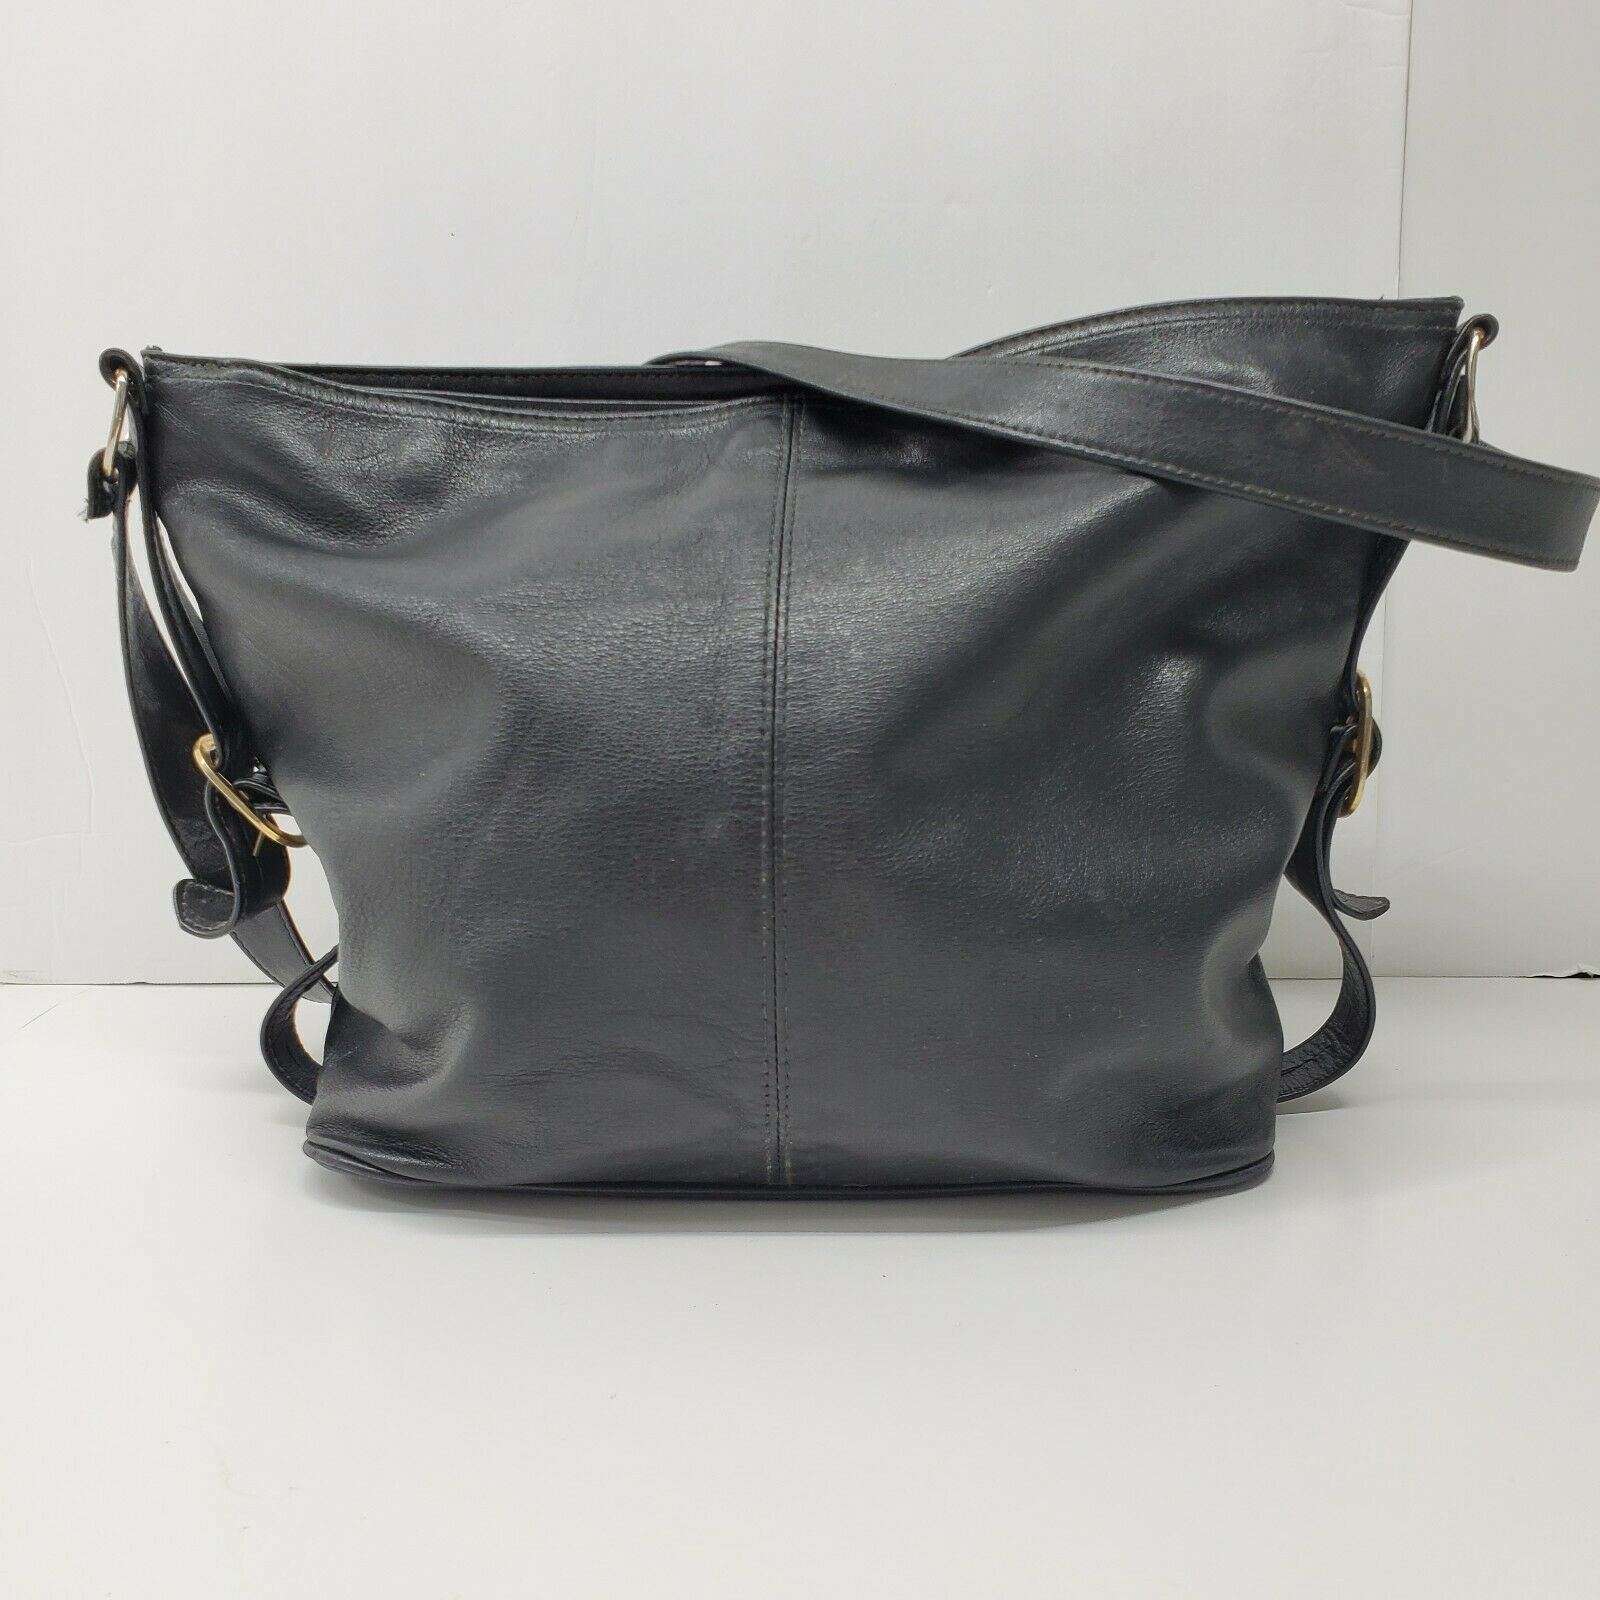 Ganson genuine Black Leather Shoulder Bag Purse Vintage - Women's Bags ...